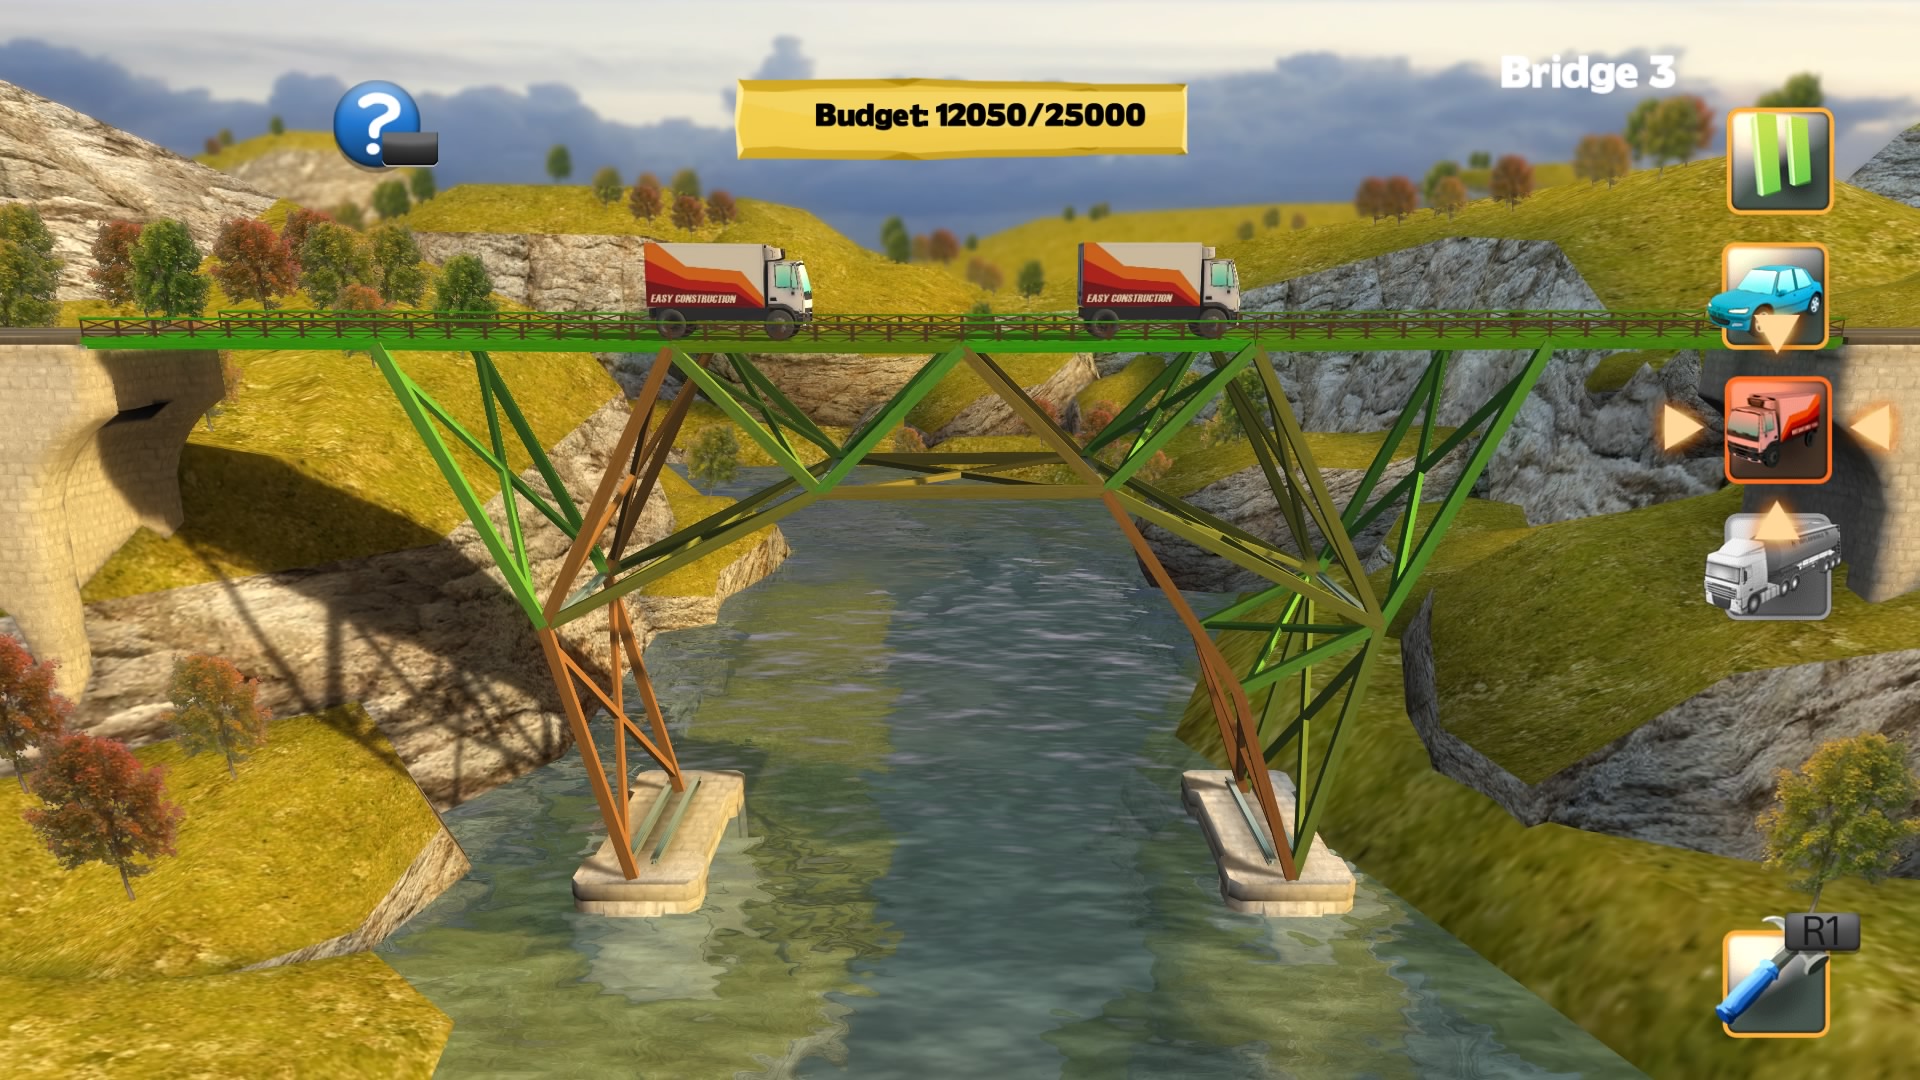 portal bridge constructor ps4 price